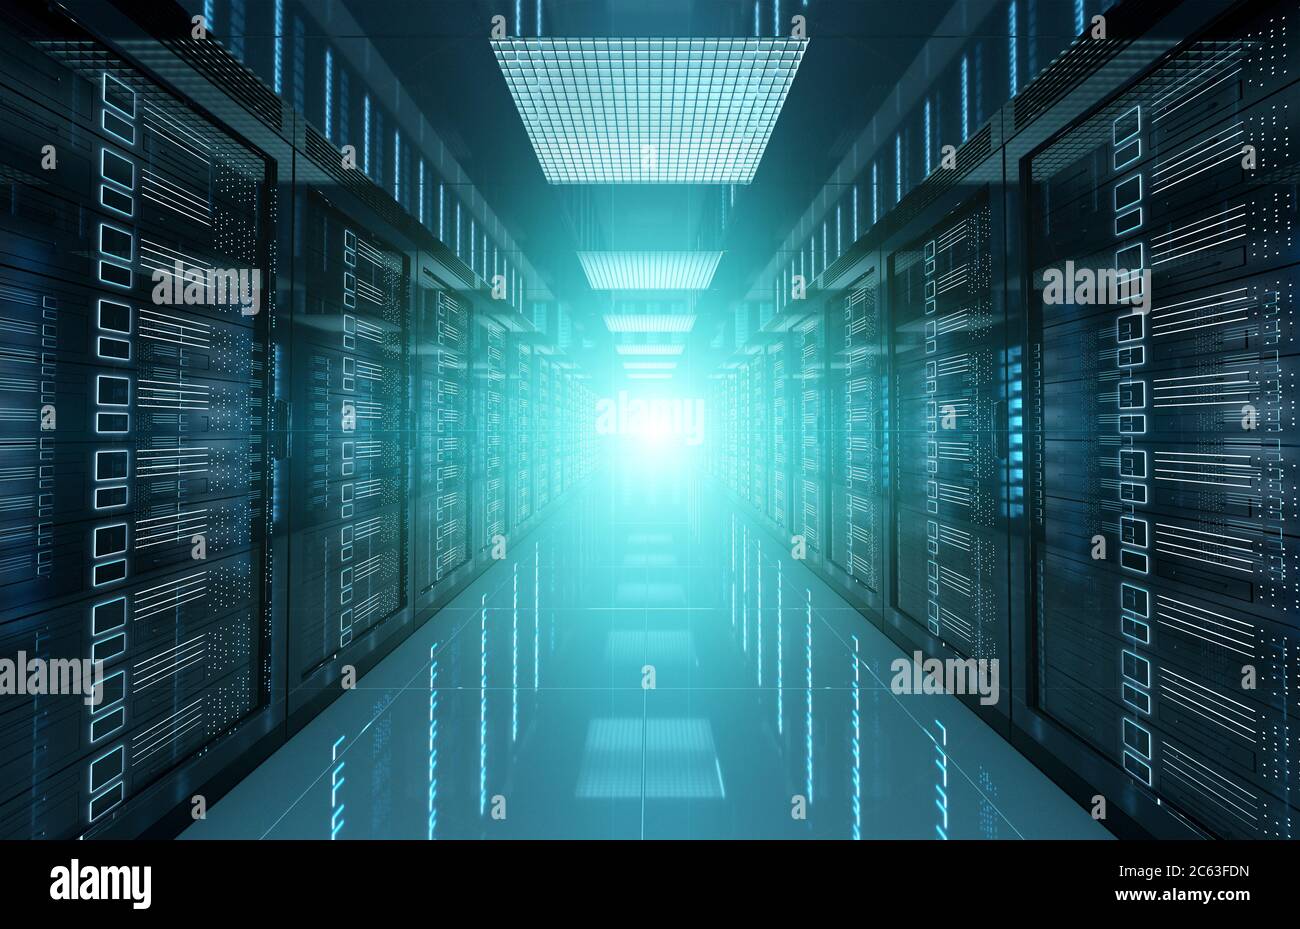 Dark servers data center room with bright halo light going through the corridor 3D rendering Stock Photo